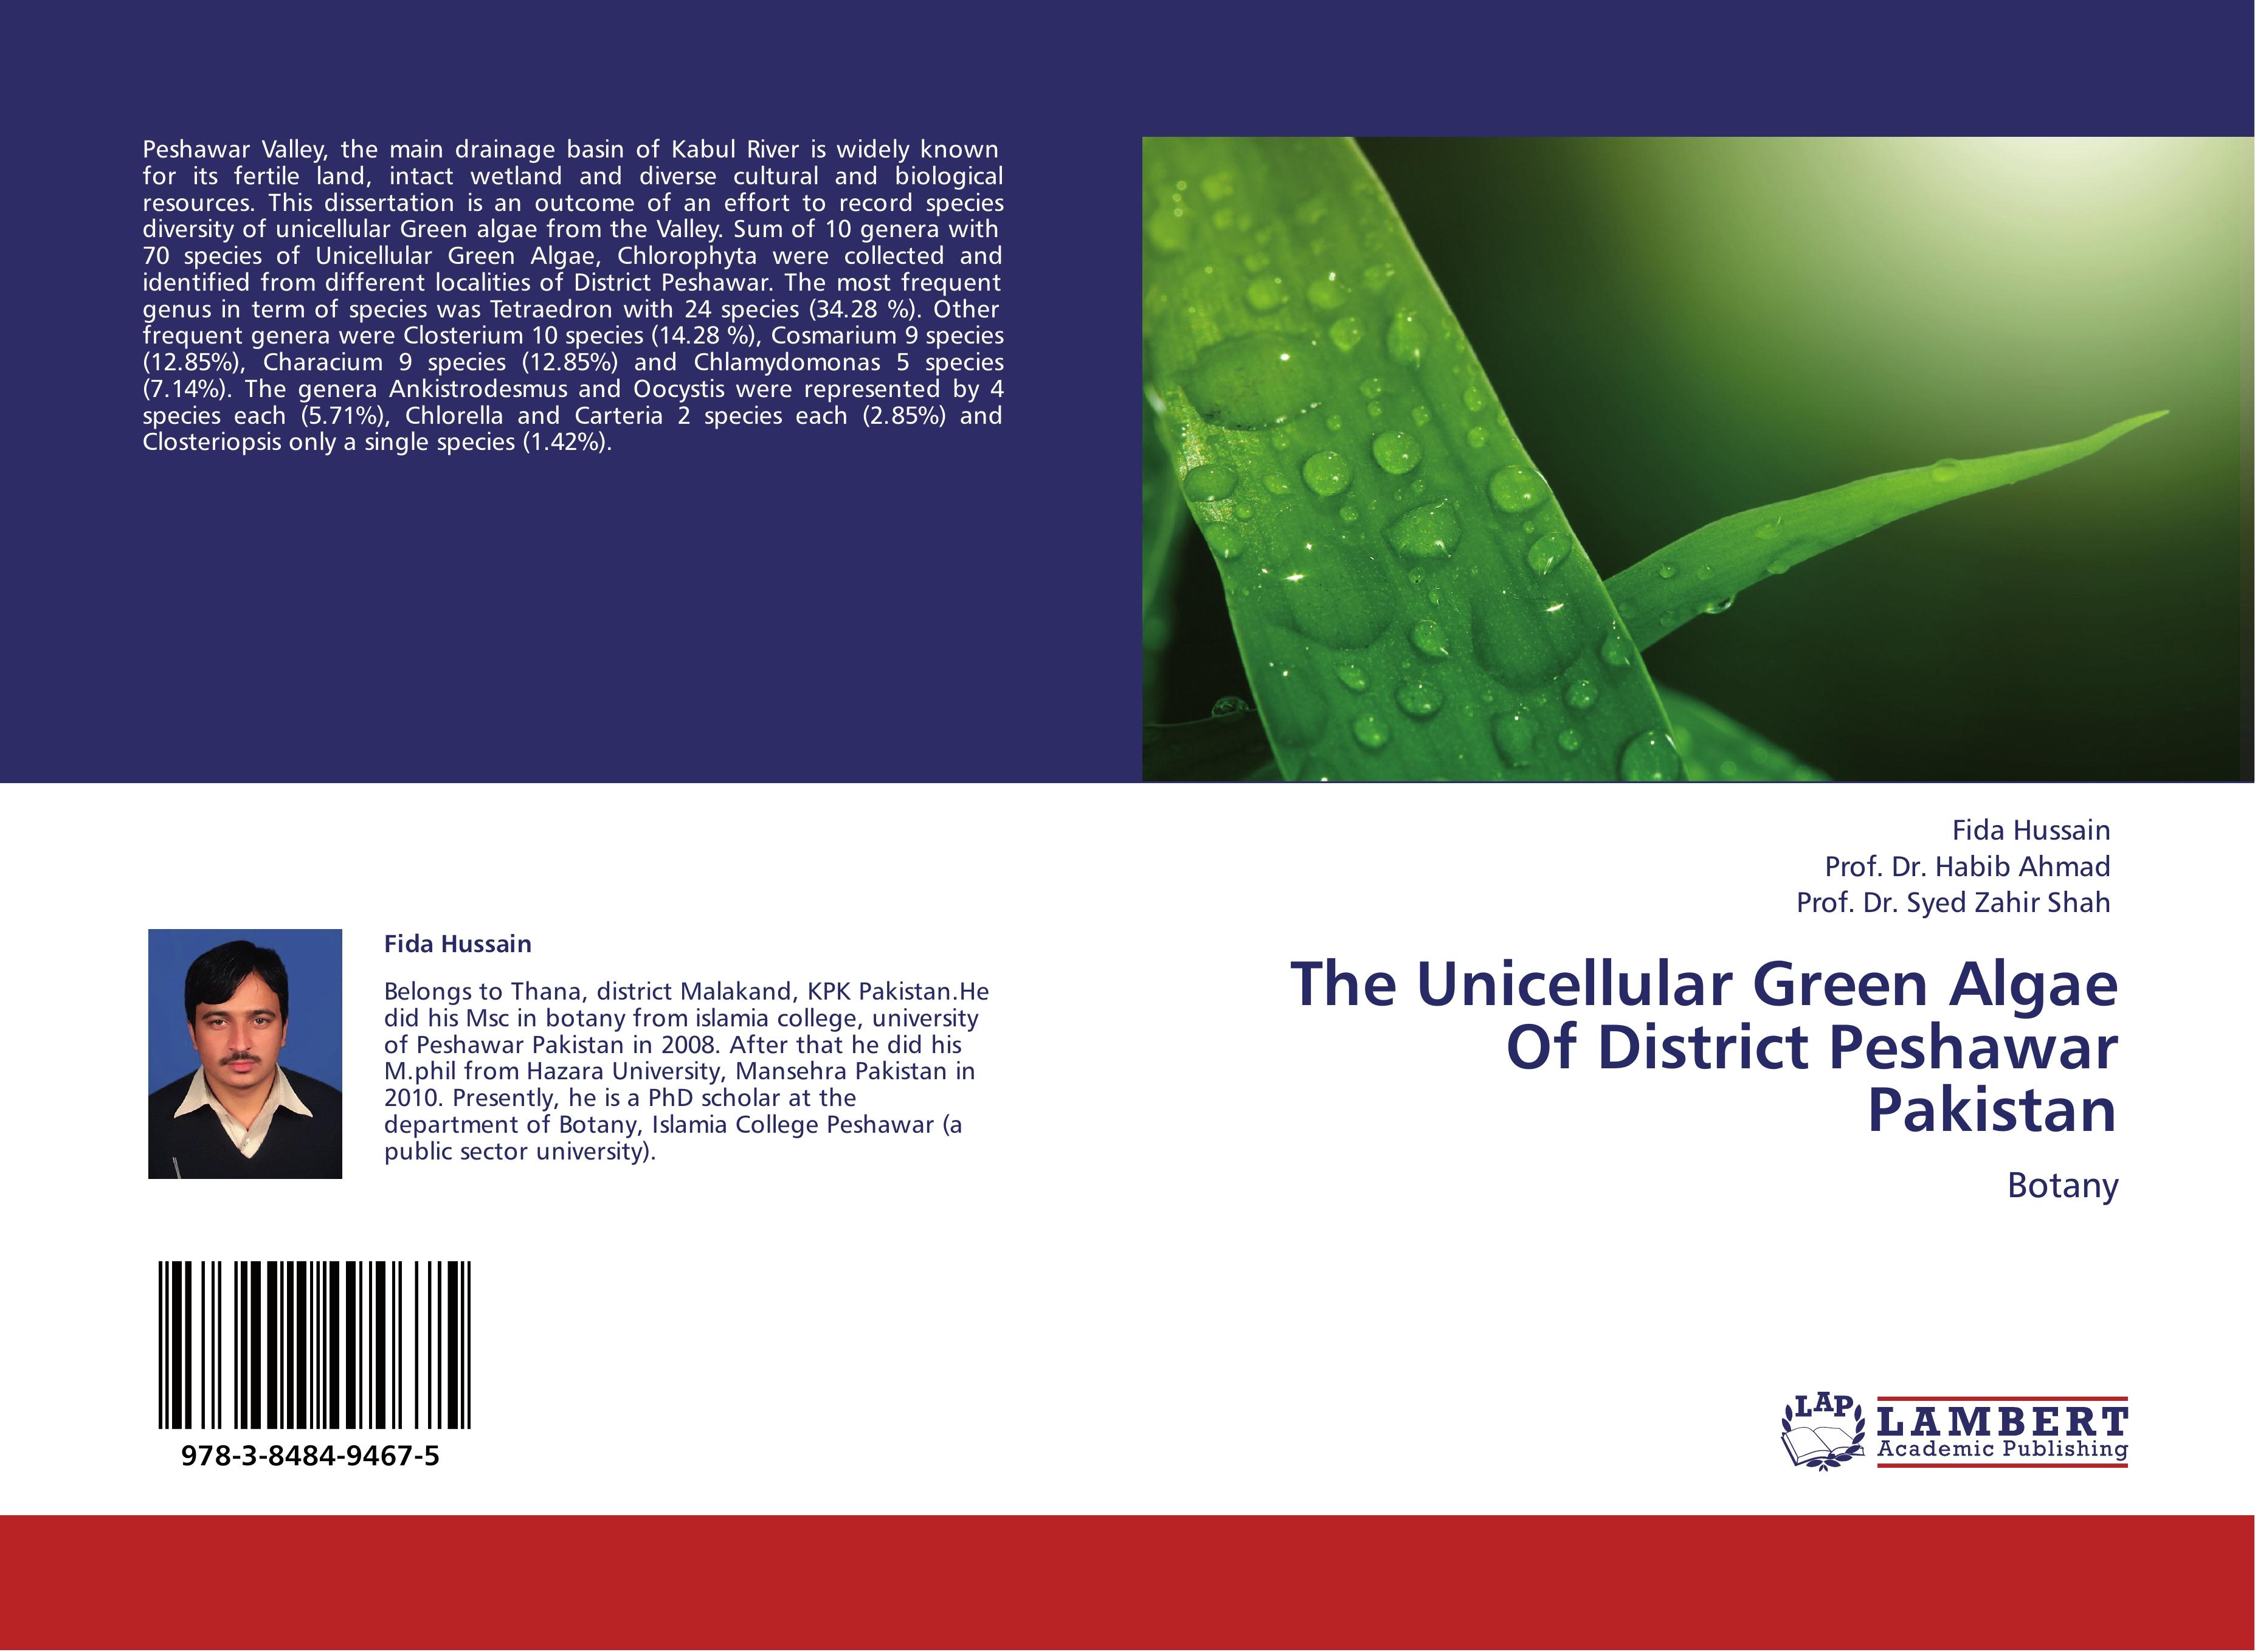 The Unicellular Green Algae Of District Peshawar Pakistan - Fida Hussain Prof. Dr. Habib Ahmad Prof. Dr. Syed Zahir Shah